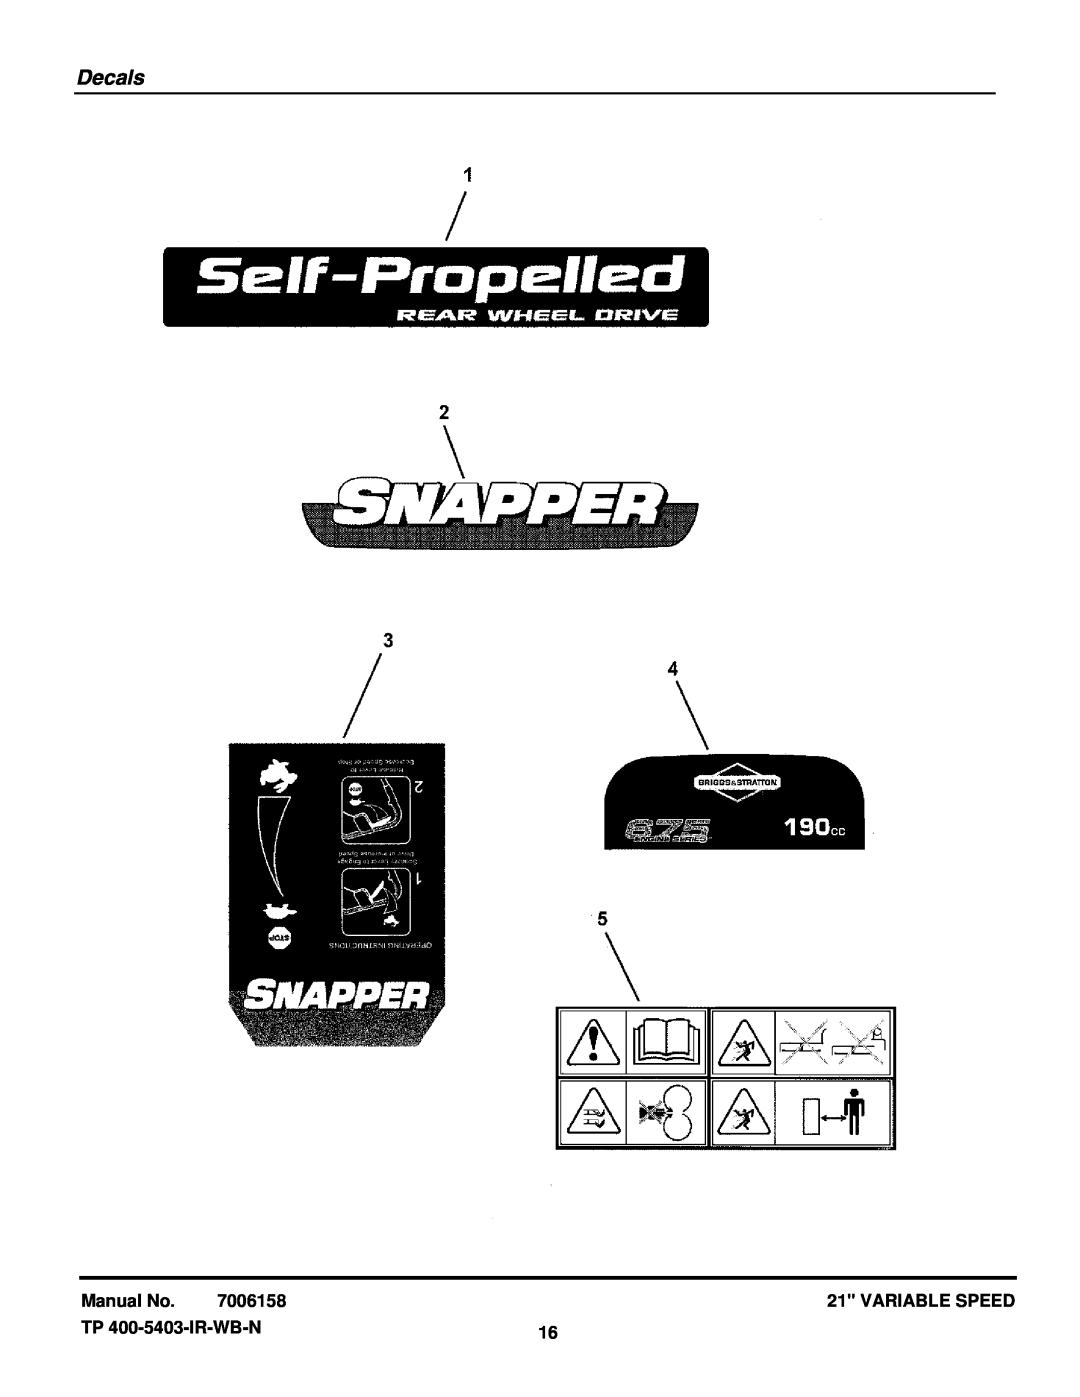 Snapper ESPV21675 (7800253) manual Decals, Manual No, 7006158, Variable Speed, TP 400-5403-IR-WB-N 